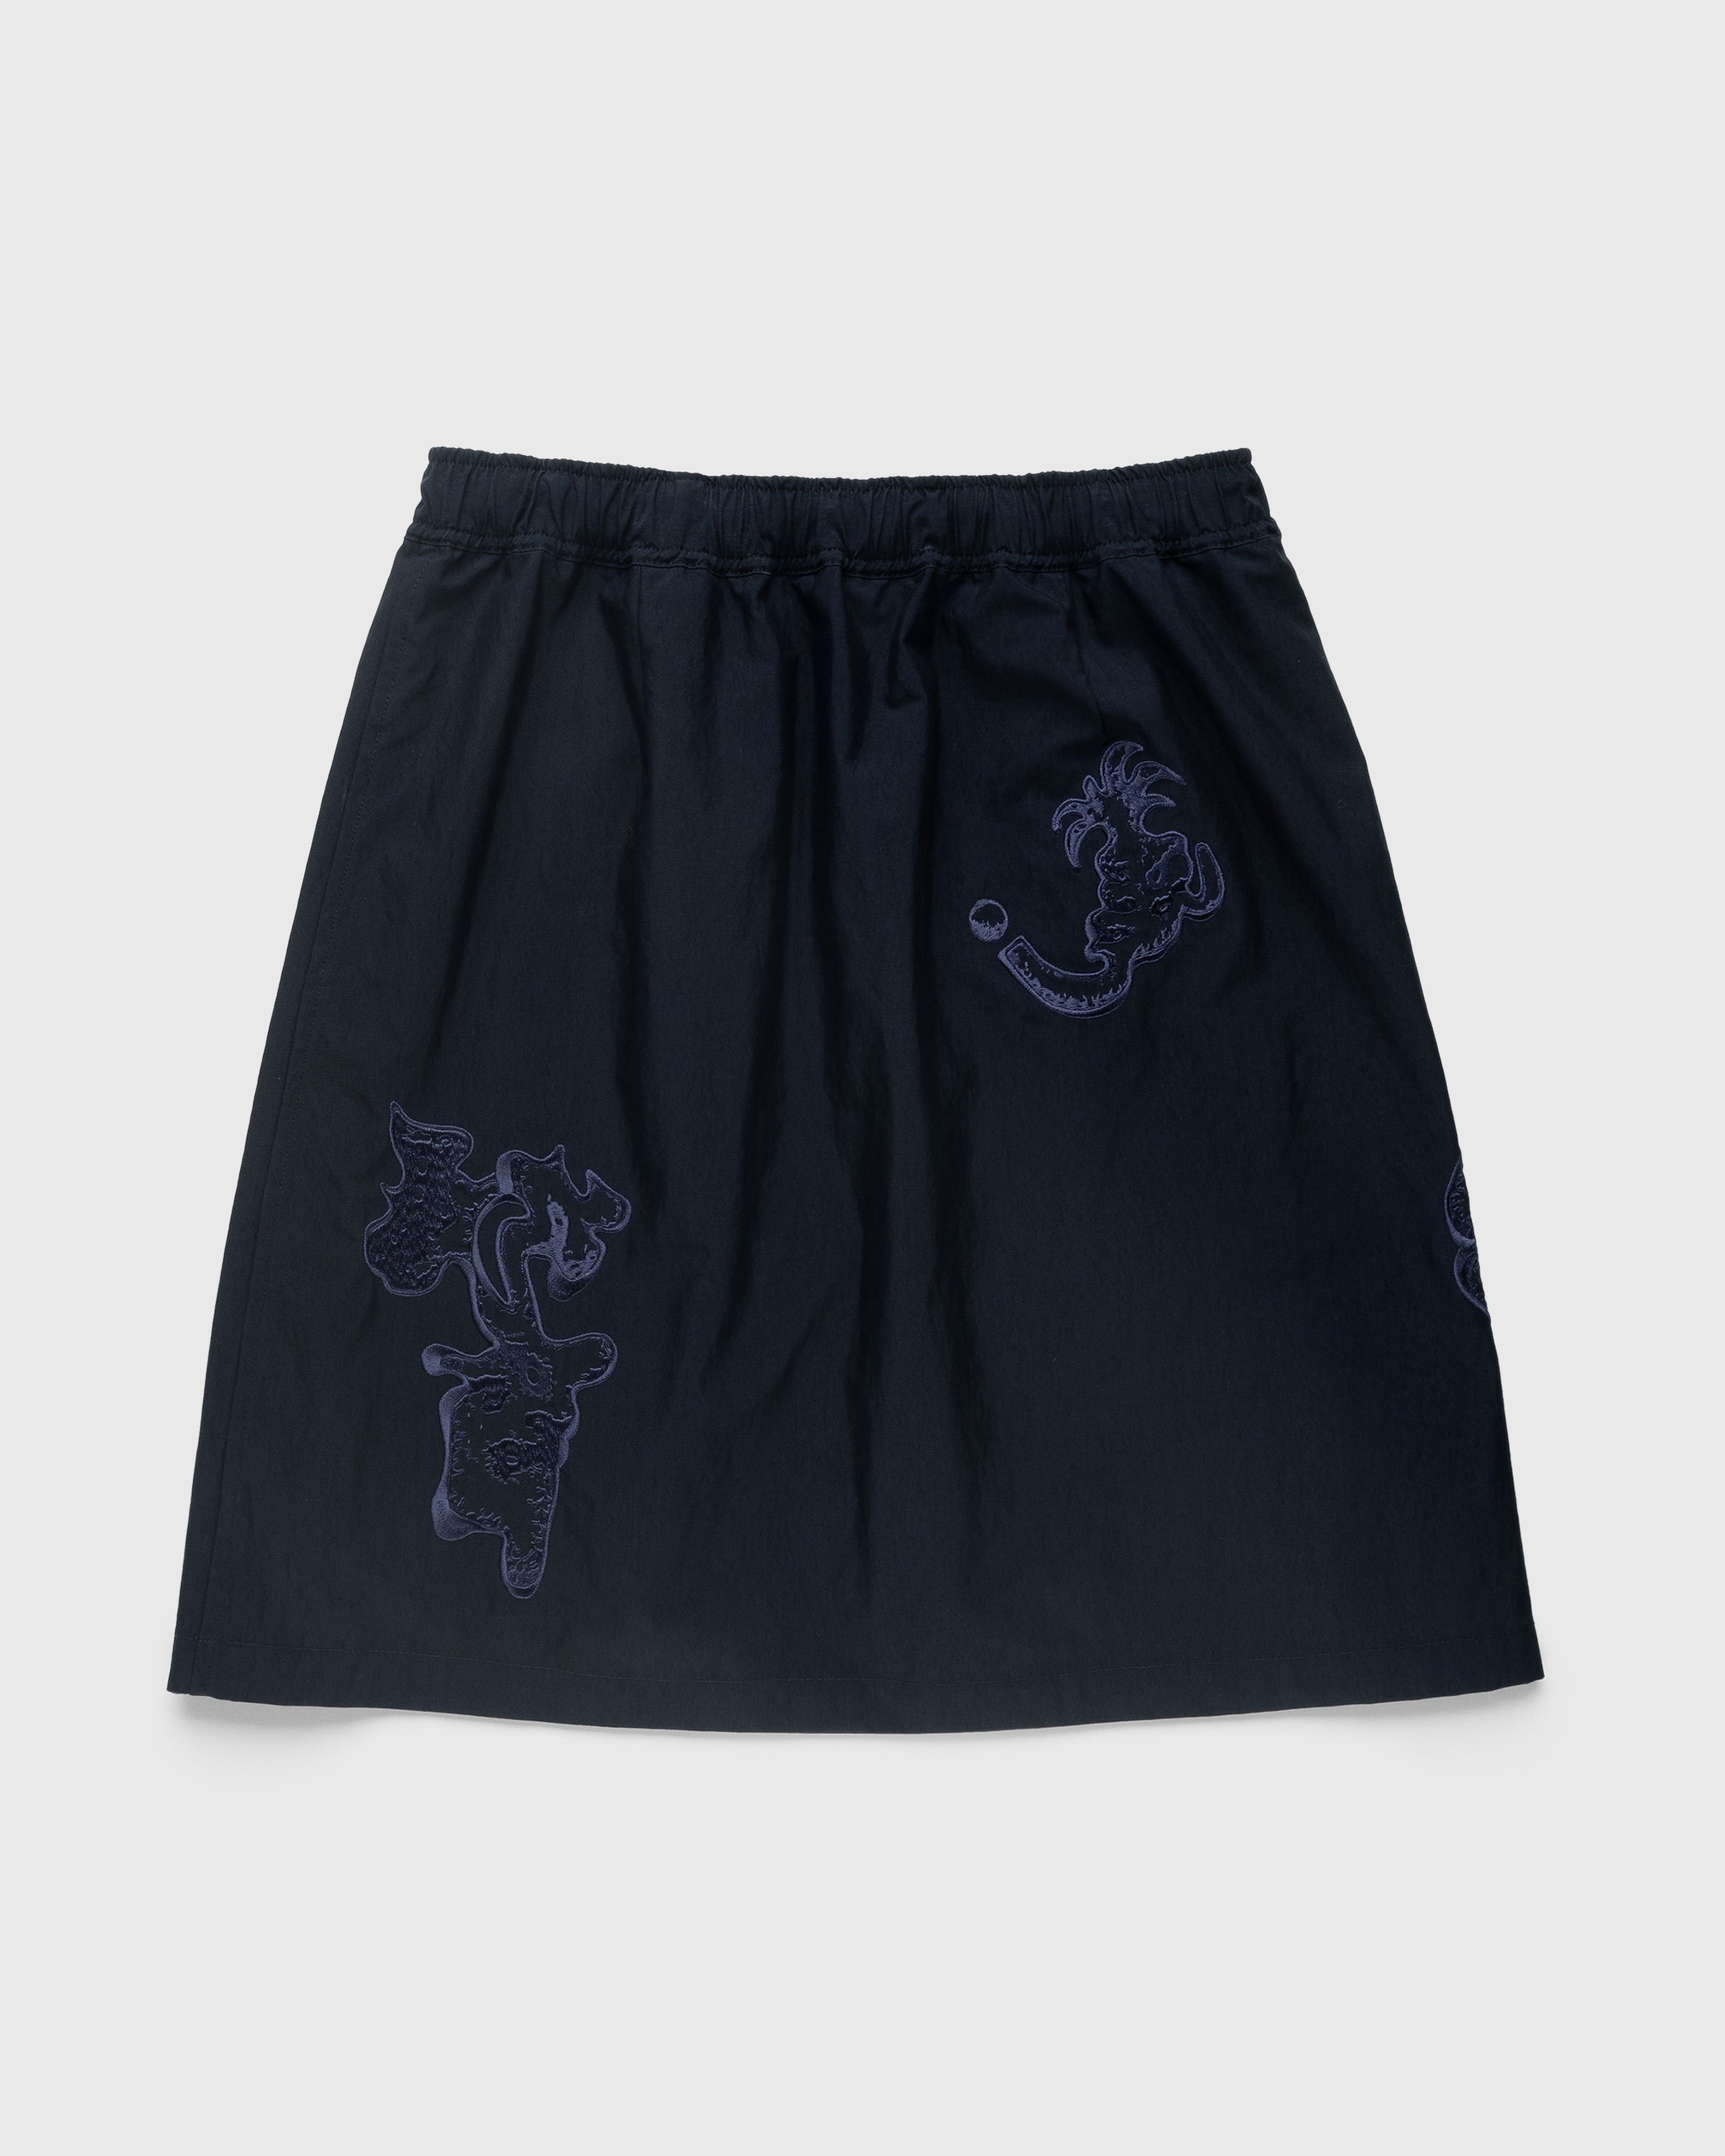 NTS x Highsnobiety - Brushed Nylon Skirt Navy - Clothing - Black - Image 2